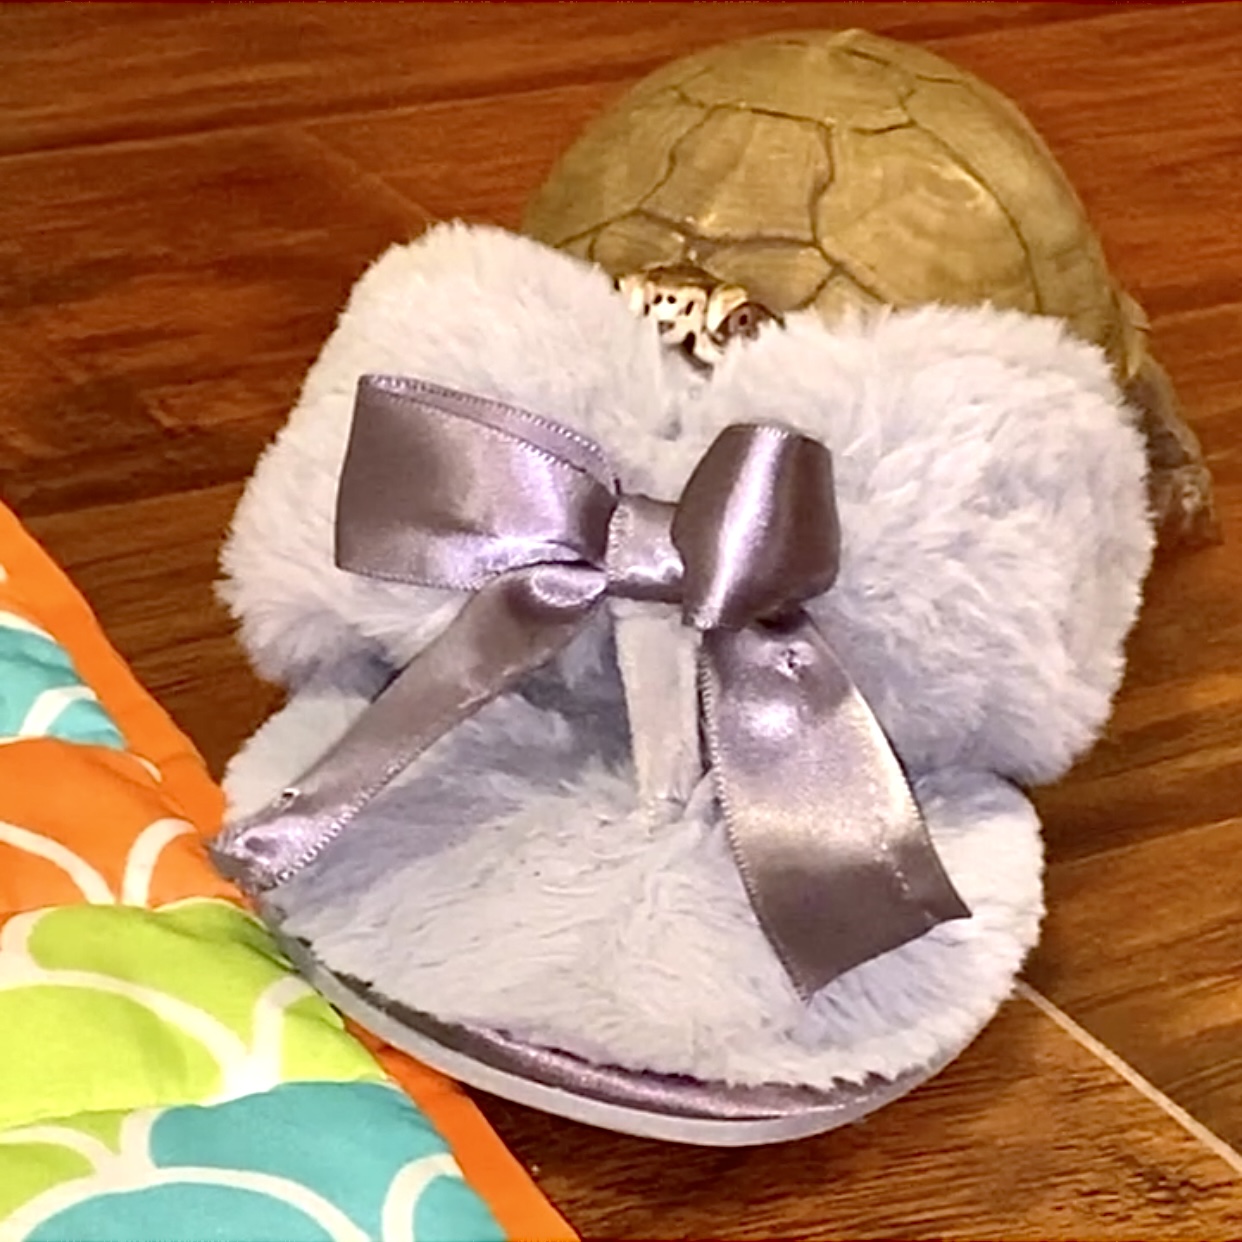 box turtle sits in slipper